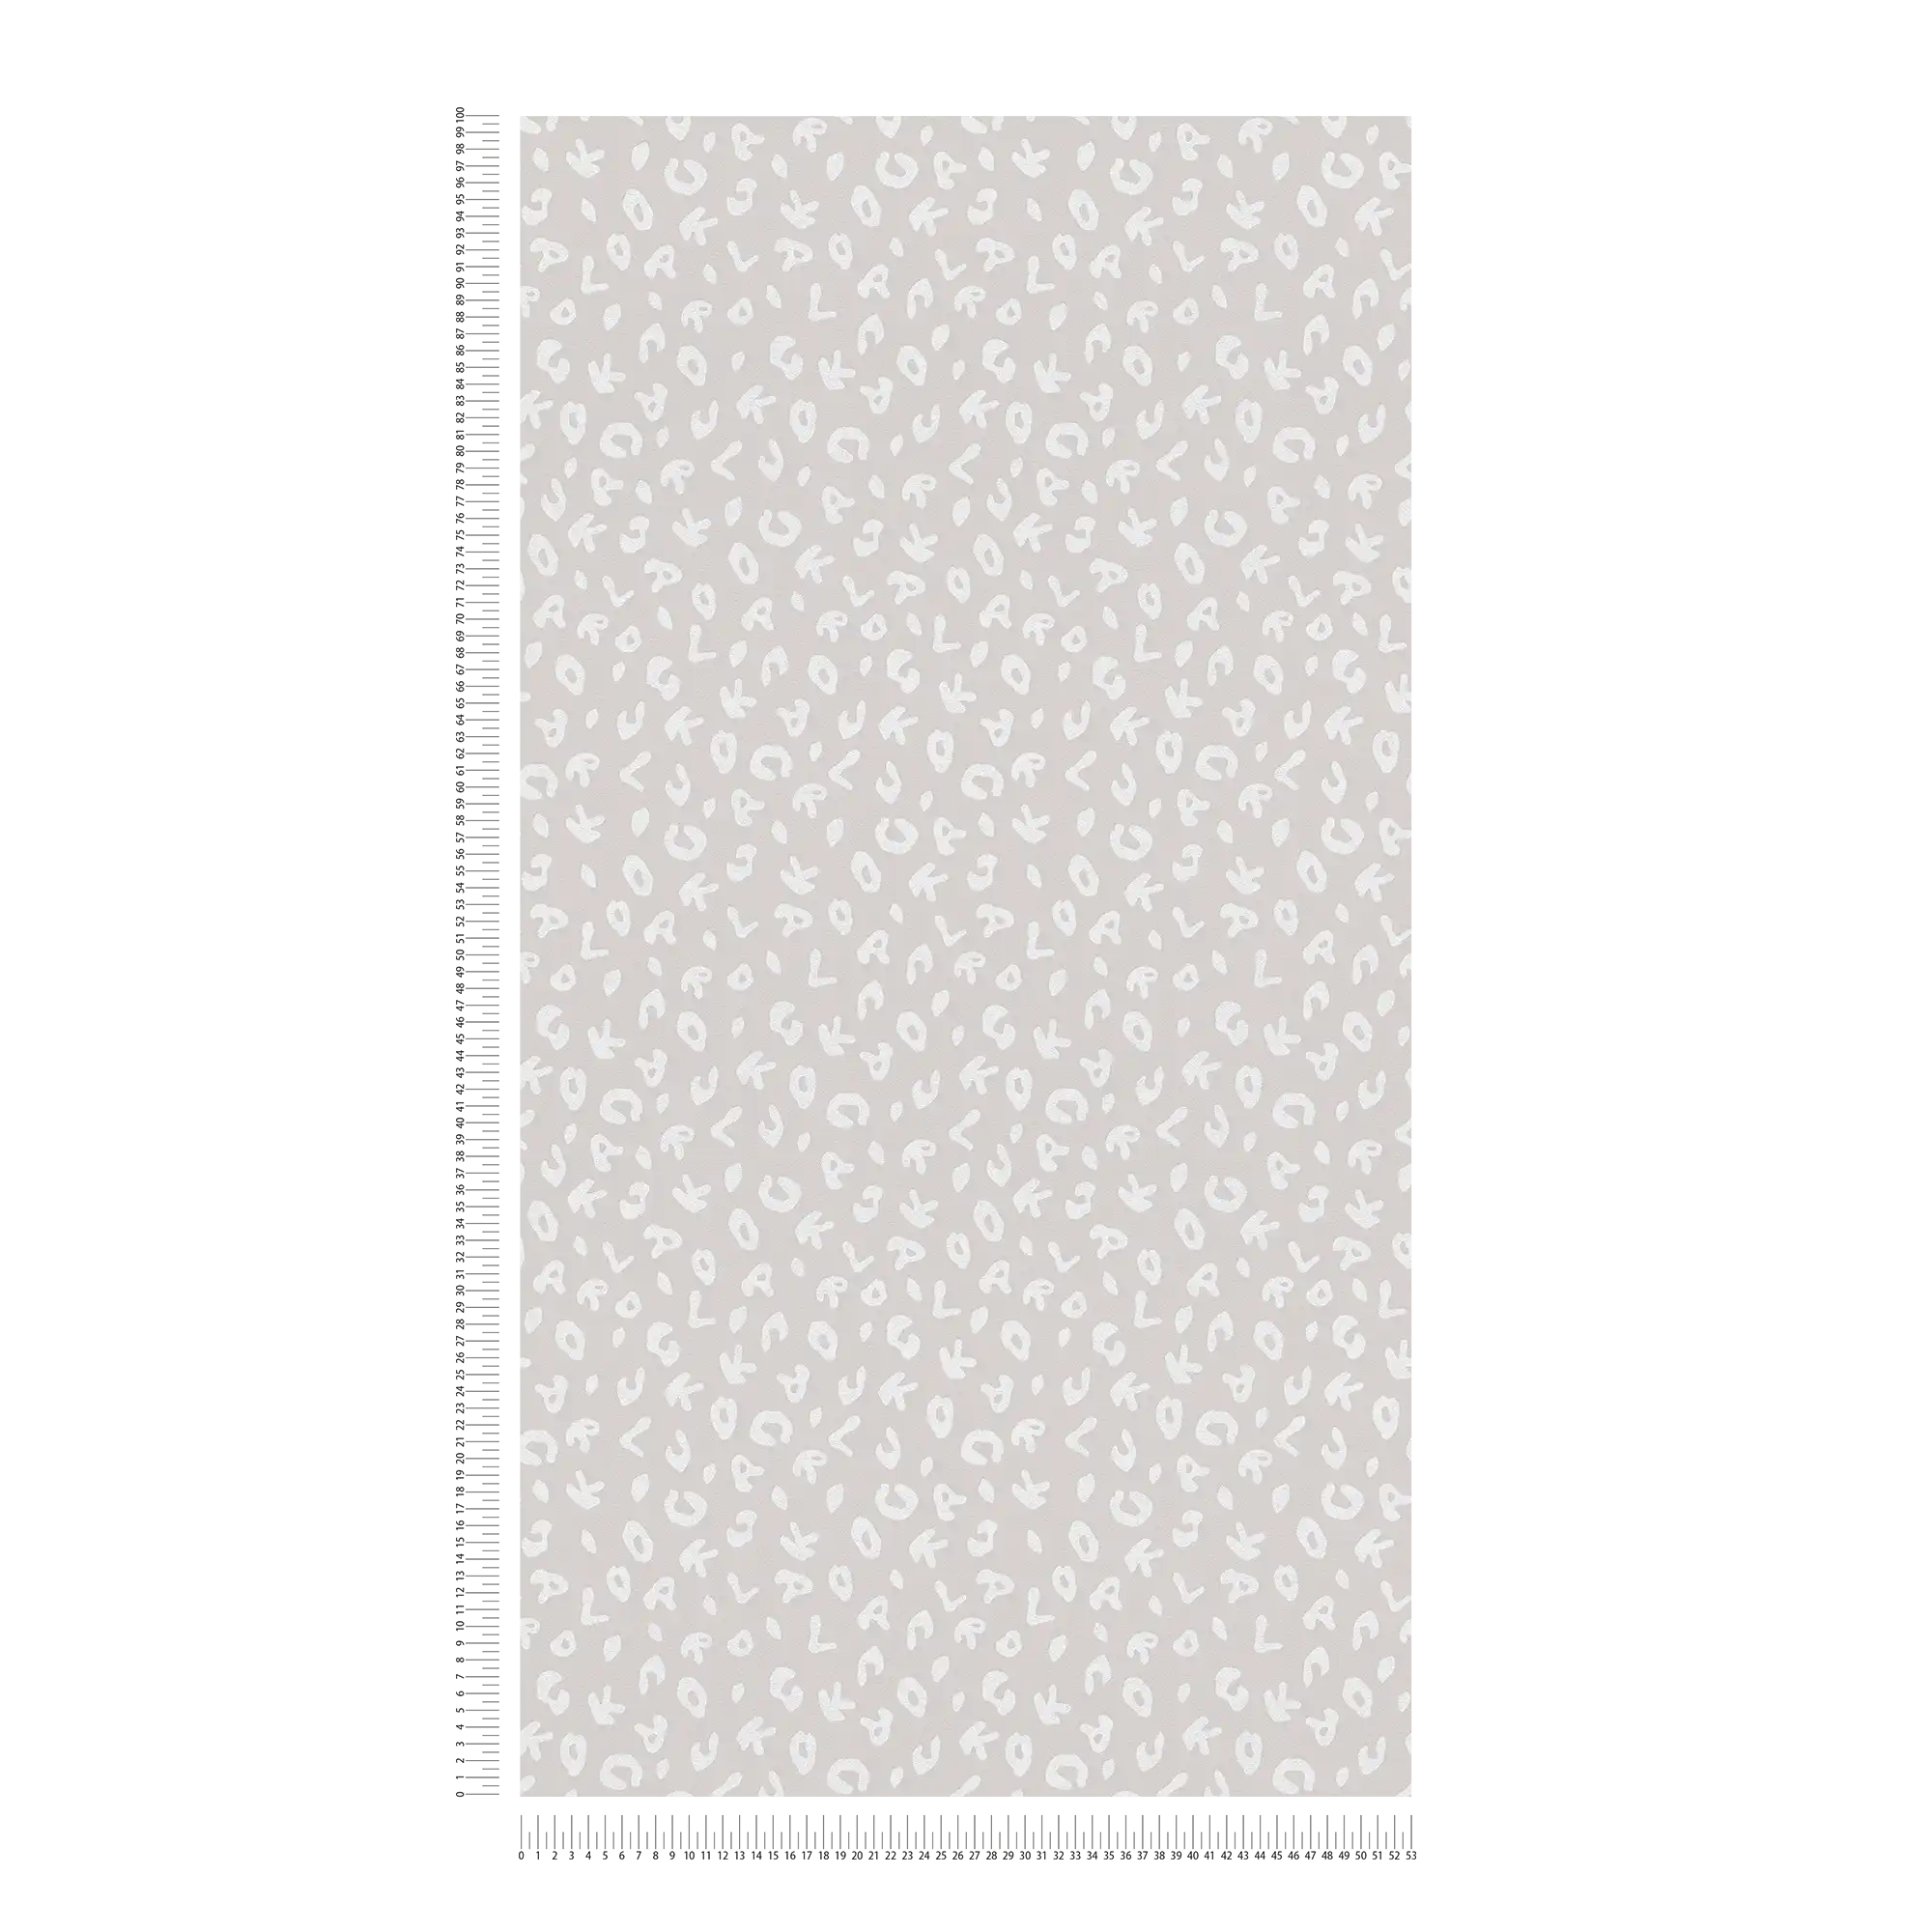             Karl LAGERFELD leopard print style wallpaper - Grey, Metallic
        